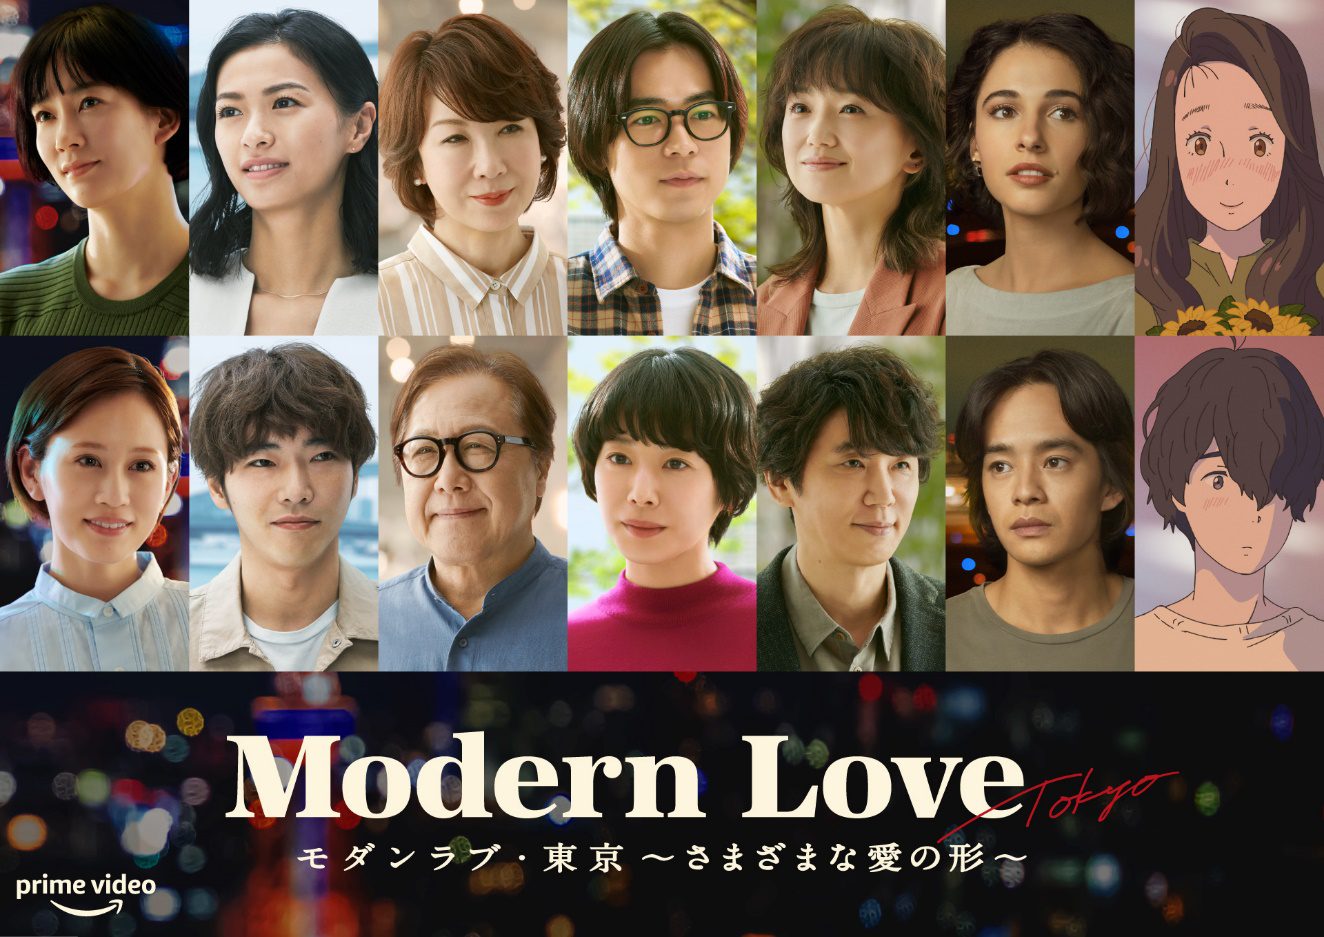 Modern Love Tokyo Episode 1 Release Date & Streaming Guide